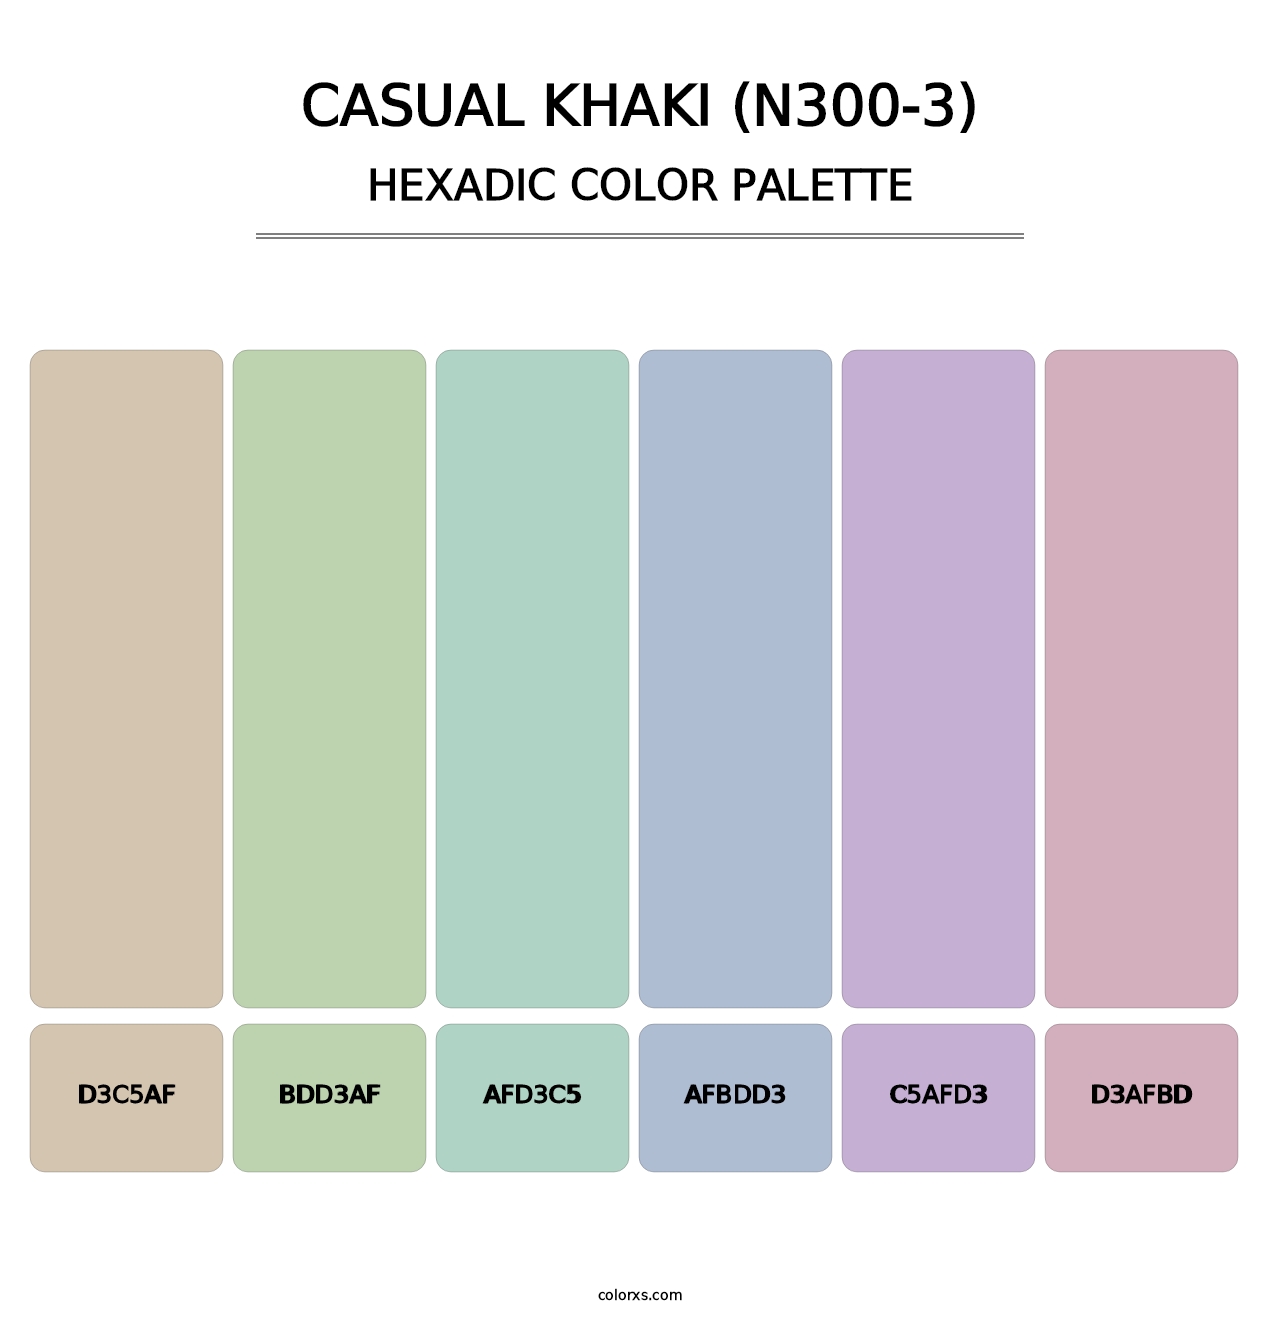 Casual Khaki (N300-3) - Hexadic Color Palette